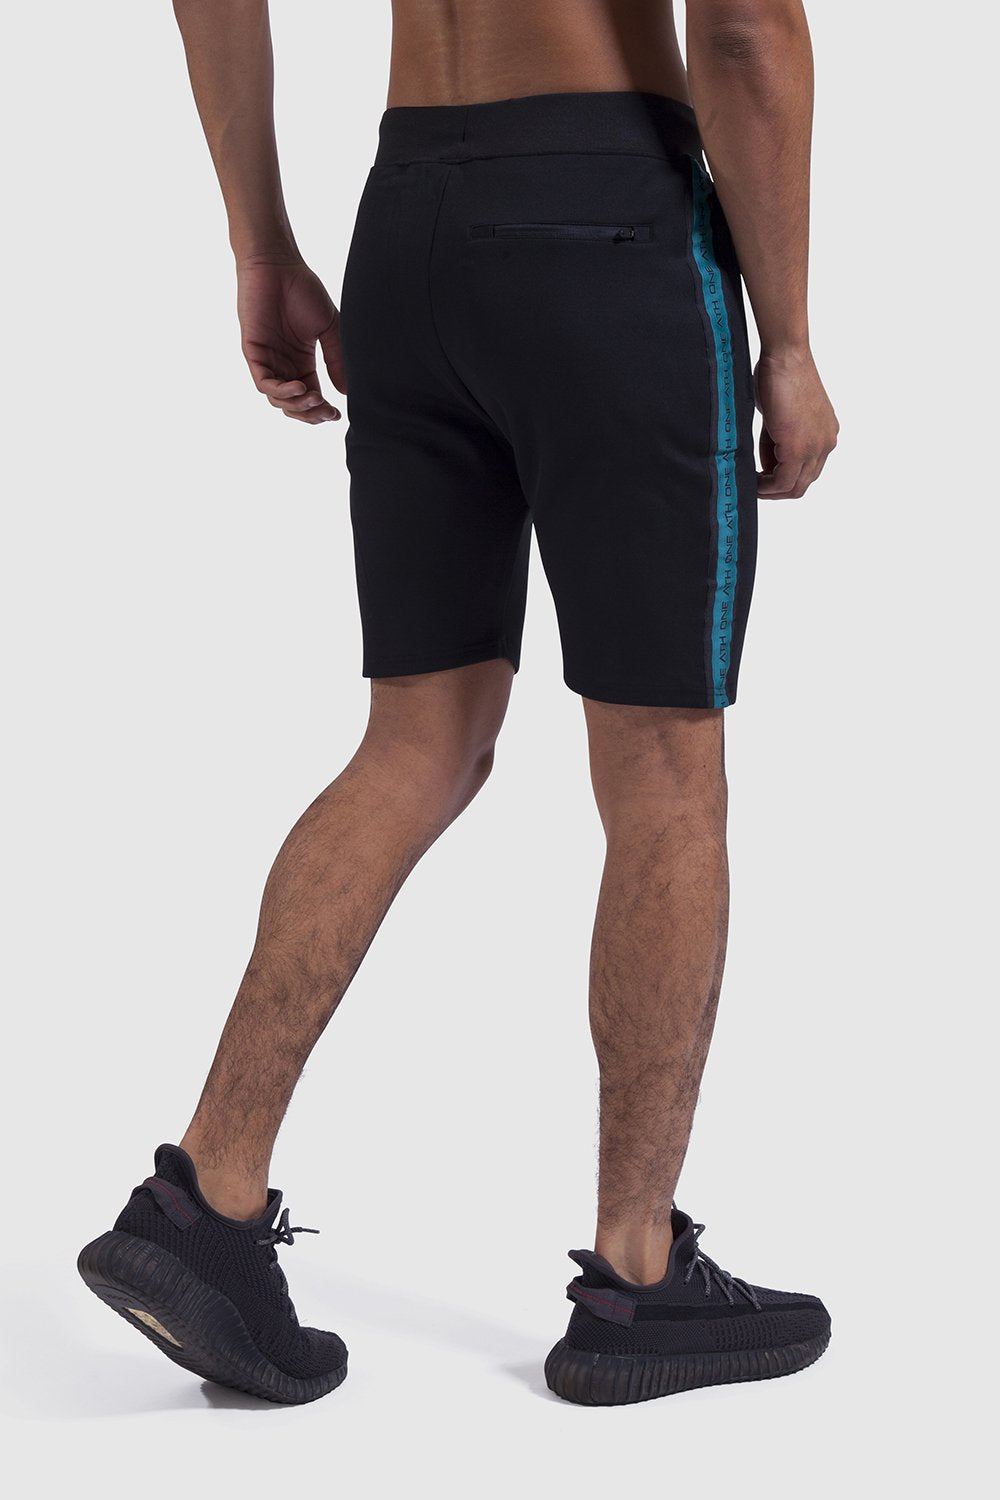 Tape detail in Black/Teal mens gym shorts